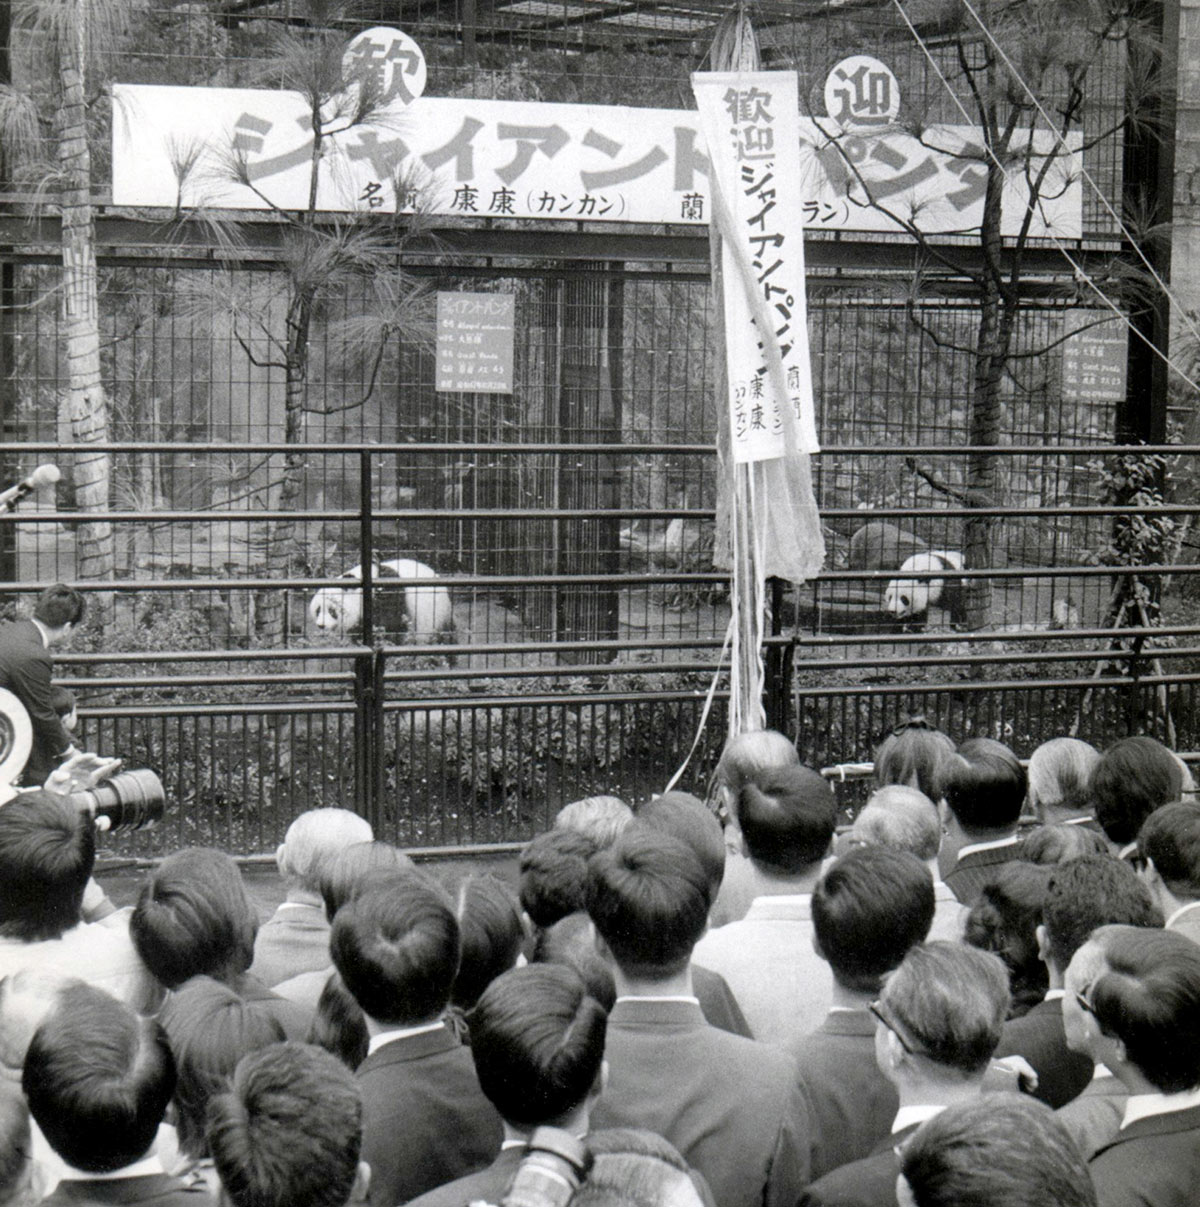 People gather to see Lan-Lan and Kang-Kang at the Ueno Zoo, Tokyo, Japan, Nov. 5, 1972. Sankei Archive/Getty Images via VCG